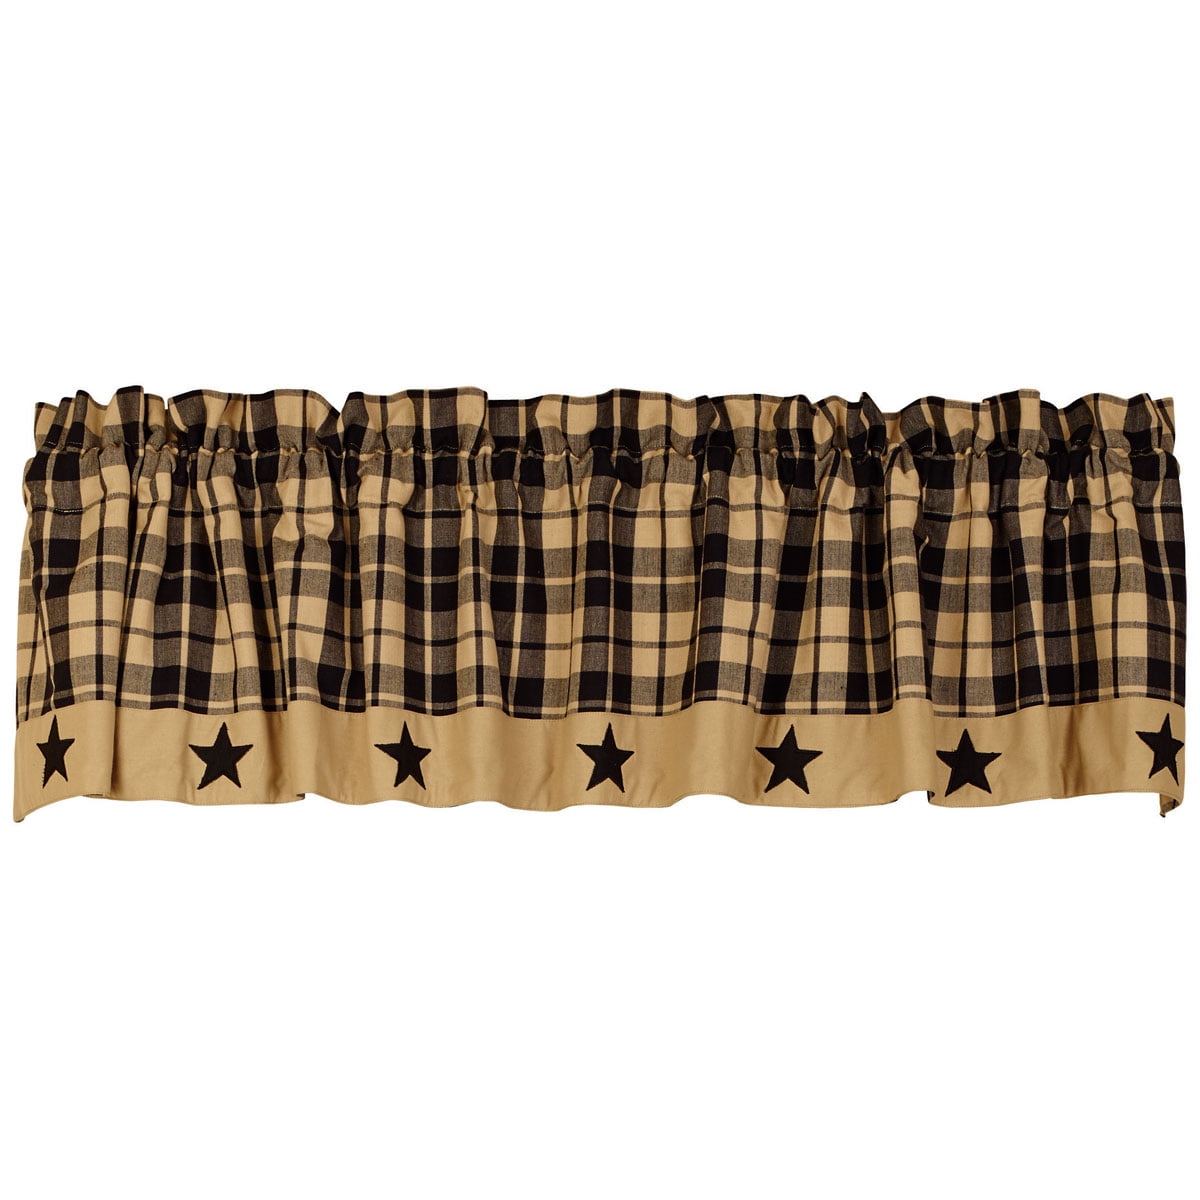 Valance 72 inch Black Tan Plaid with Applique Stars Primitive Curtain 